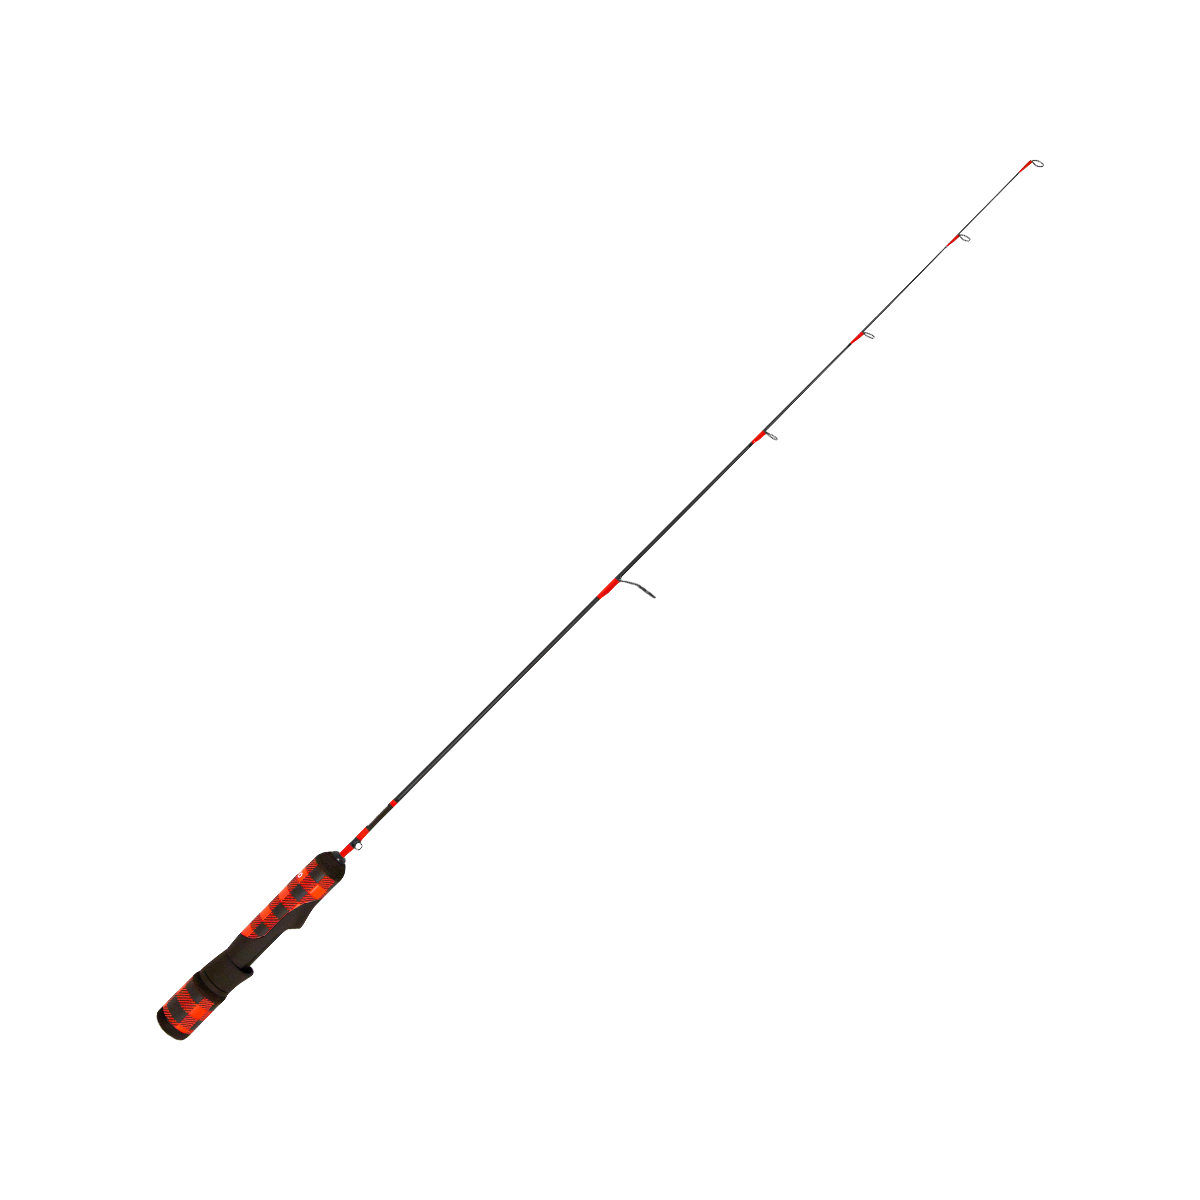 MAGS 32 Rod (Medium)